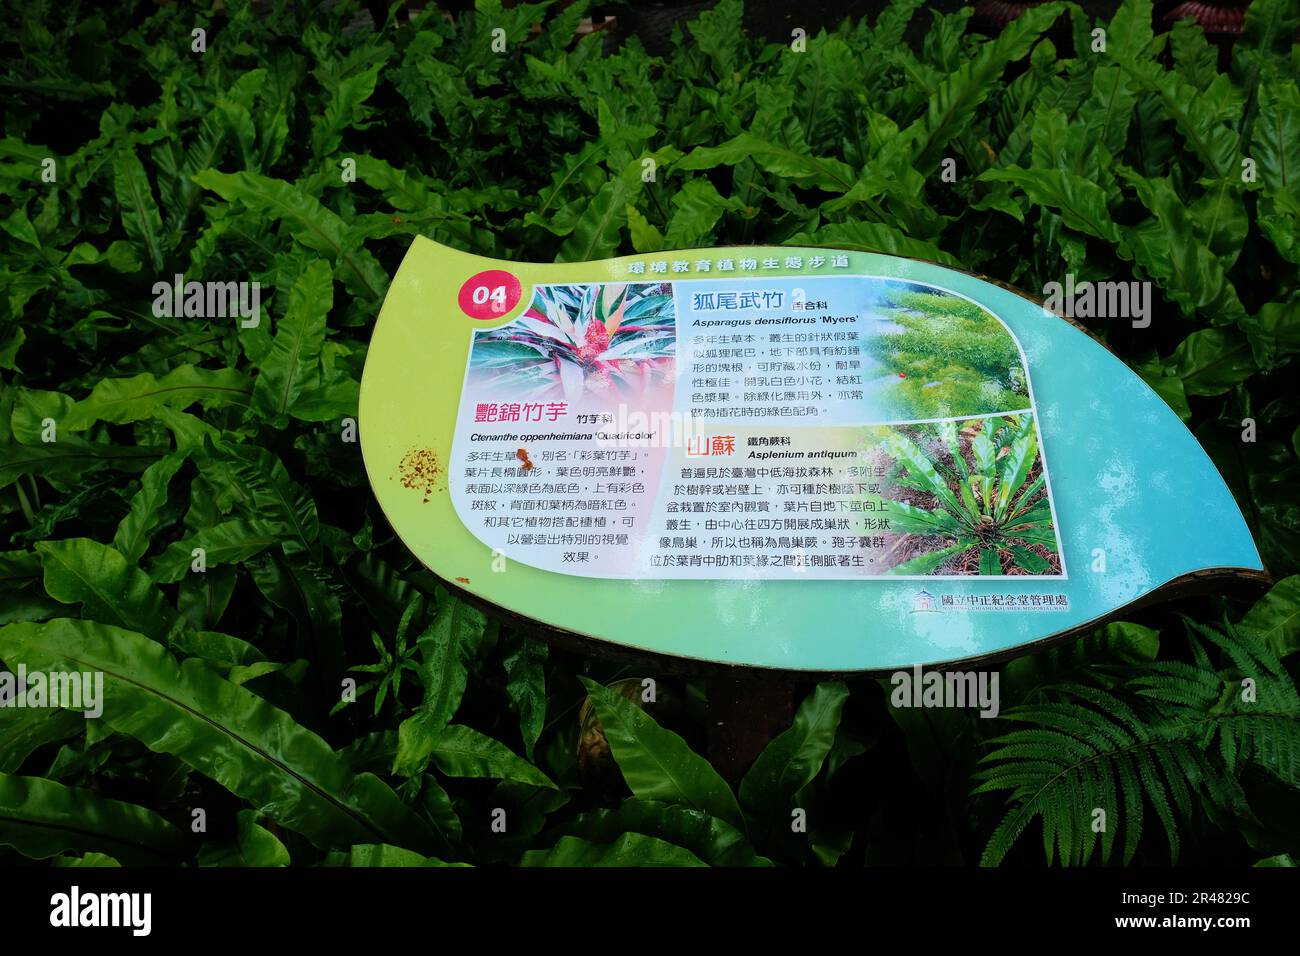 Latin nomenclature and description sign for Asparagus densiflorus Myers, Asplenium antiquum, and Ctenanthe oppenheimiana Quadricolor; Taipei, Taiwan. Stock Photo